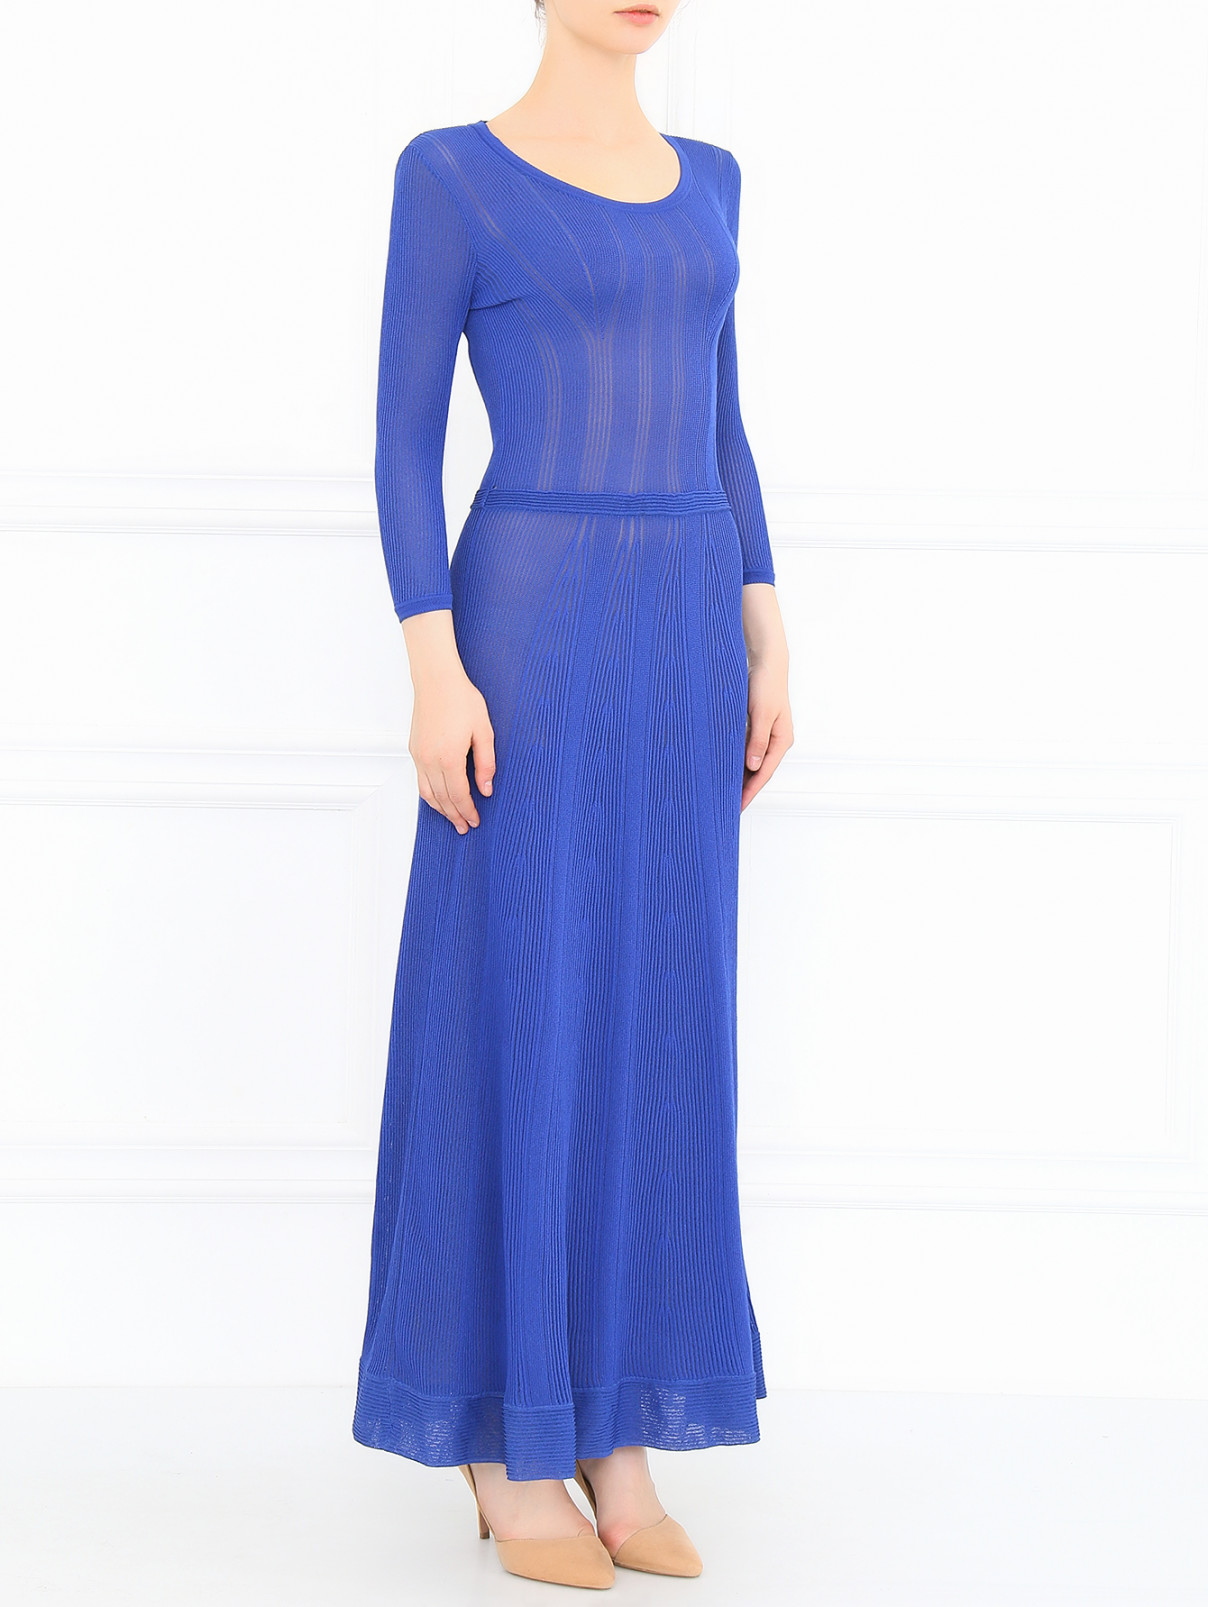 Платье-макси с рукавами 3/4 Alberta Ferretti  –  Модель Общий вид  – Цвет:  Синий